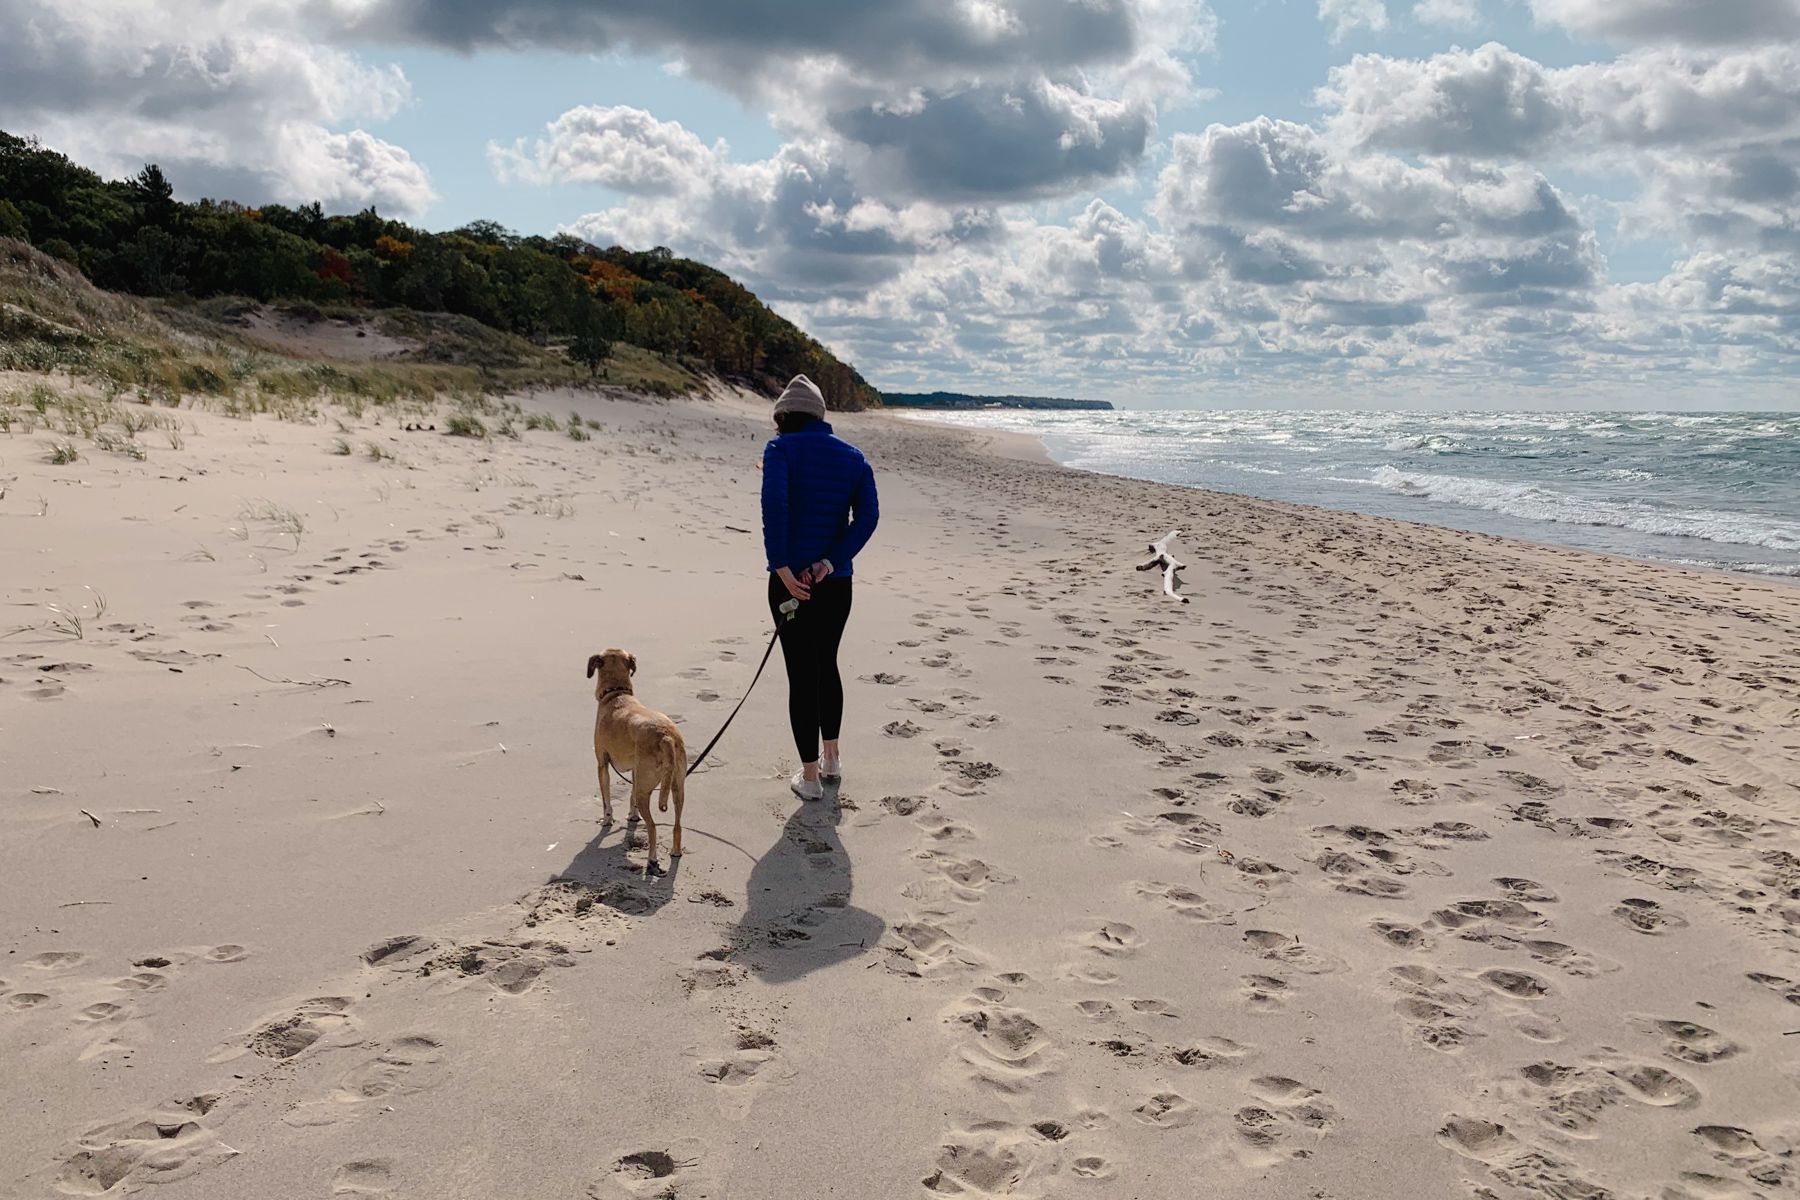 Cloudy Lake Michigan beach. Julia and Matisse walking ahead, footprints on sand, driftwood log.